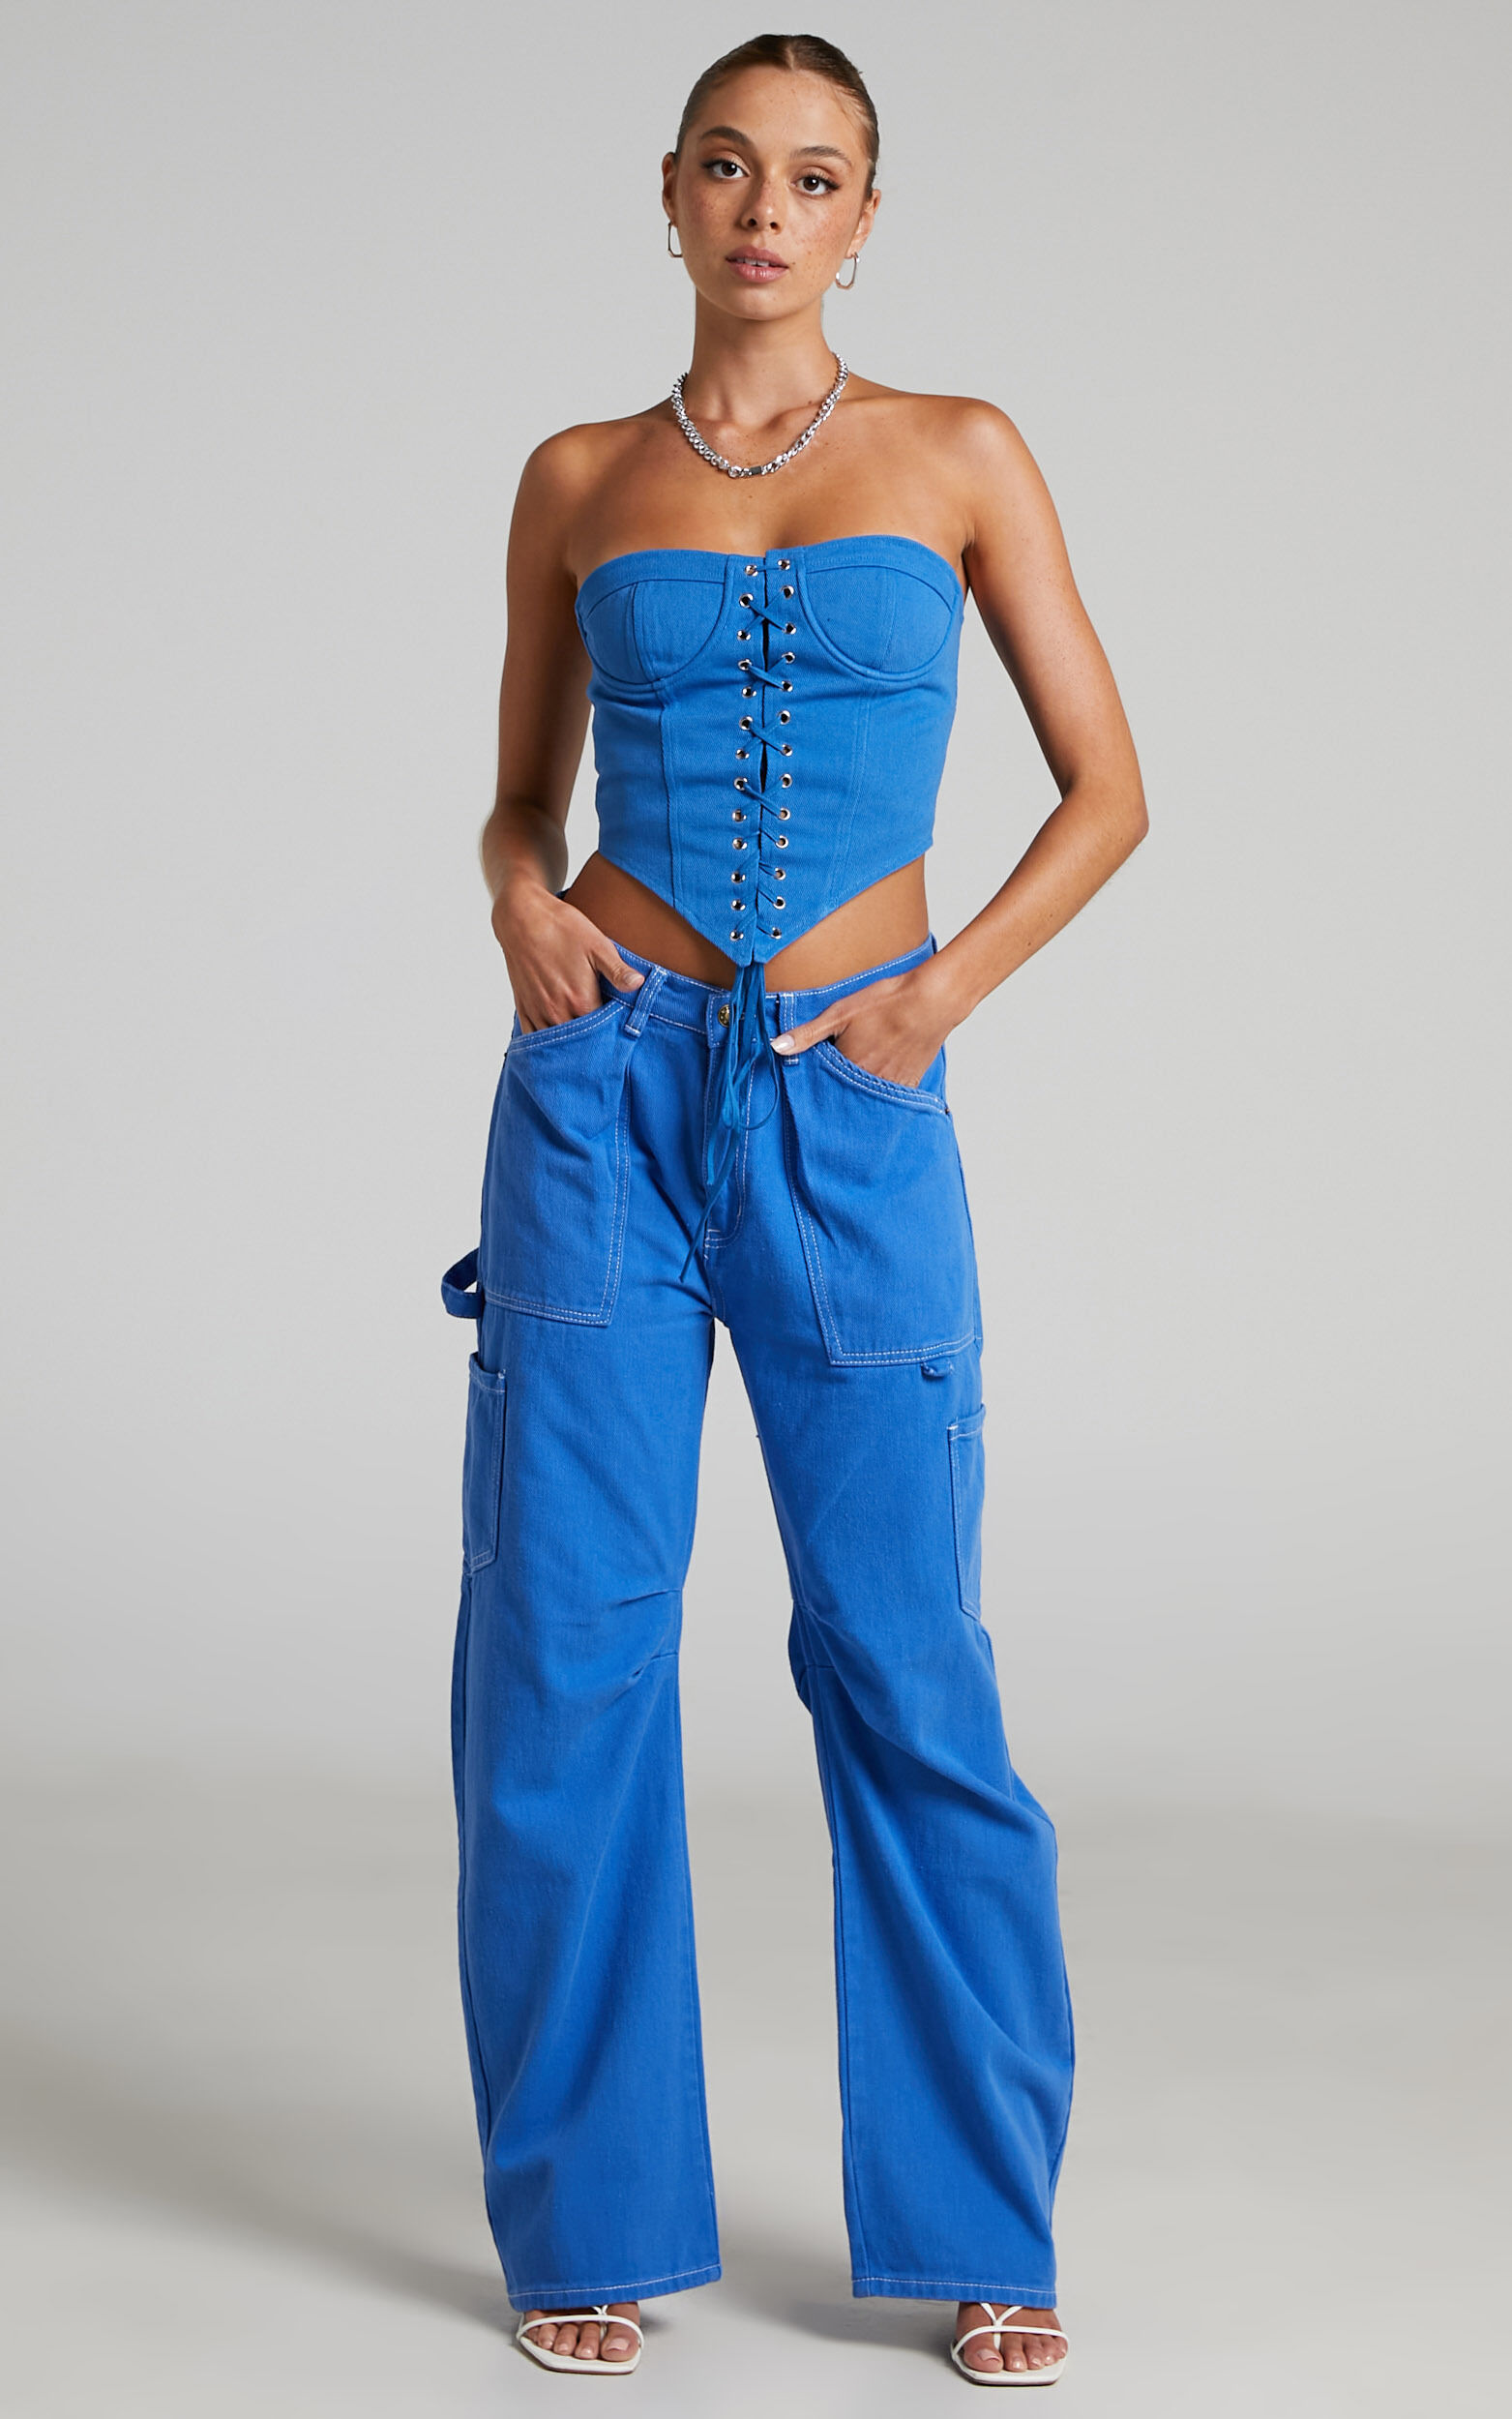 Lioness - Miami Vice Pants in Blue - L, BLU4